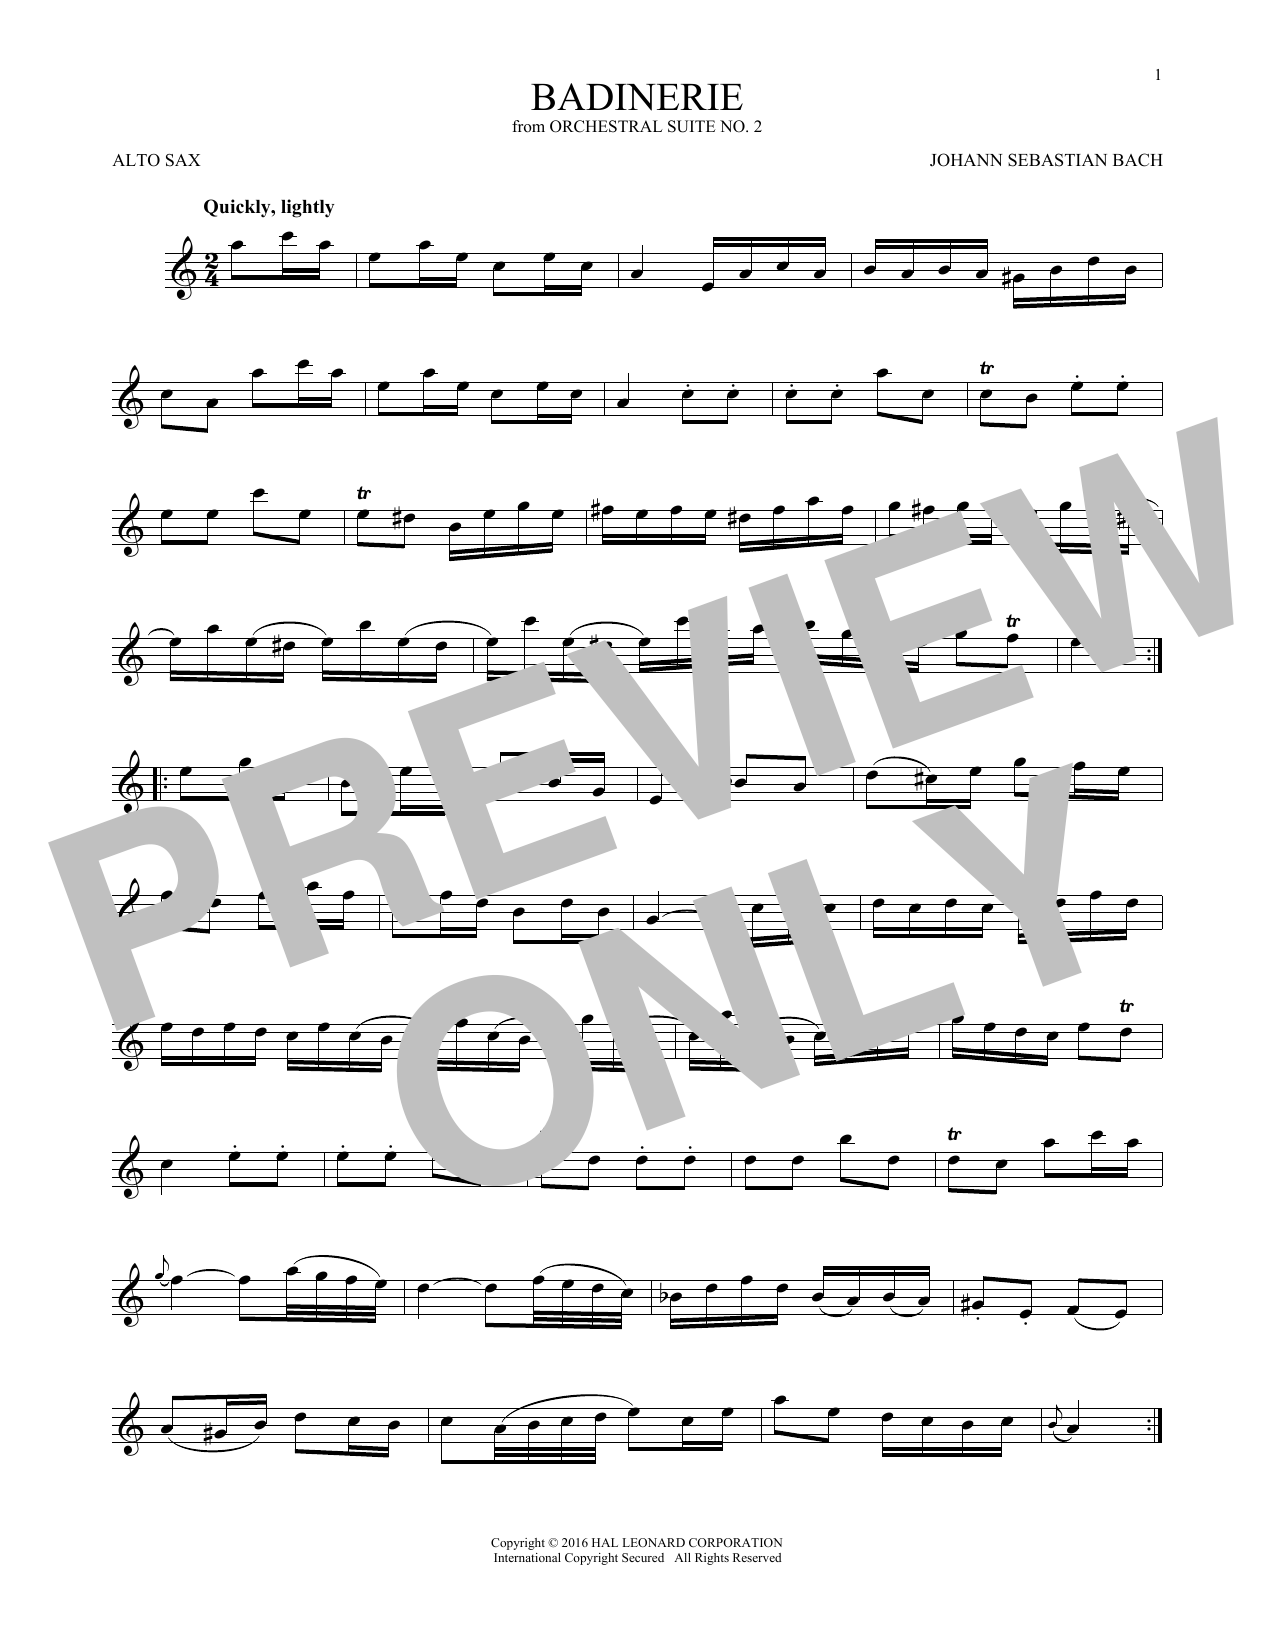 Johann Sebastian Bach Badinerie (Suite No. 2) Sheet Music Notes & Chords for Flute - Download or Print PDF